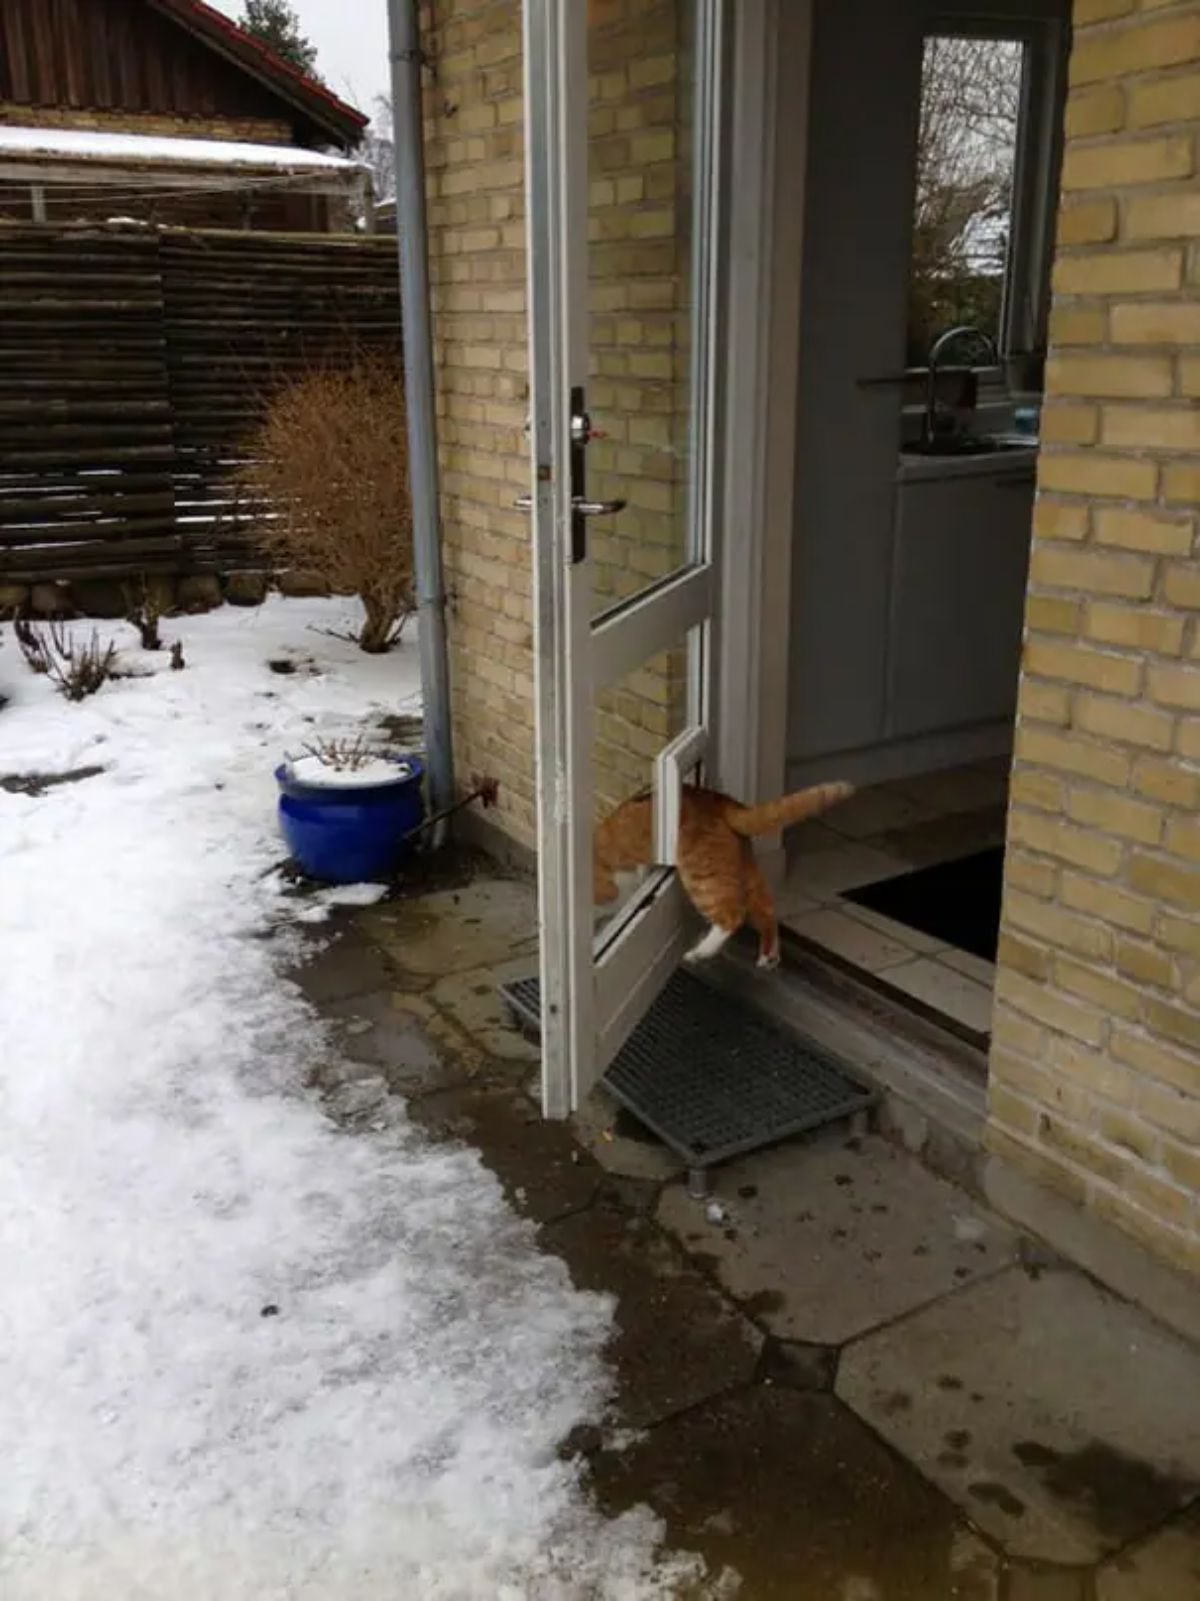 orange and white cat halfway through a cat door in an open glass door with the cat's legs in the air